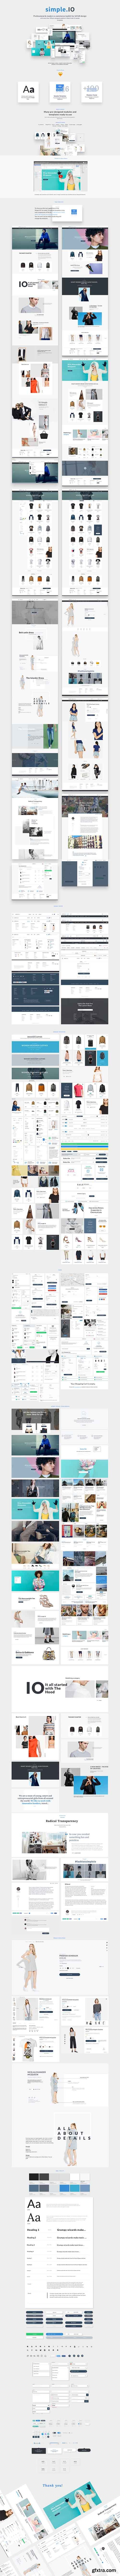 Simple.IO - Web based modern E-Commerce UI Kit